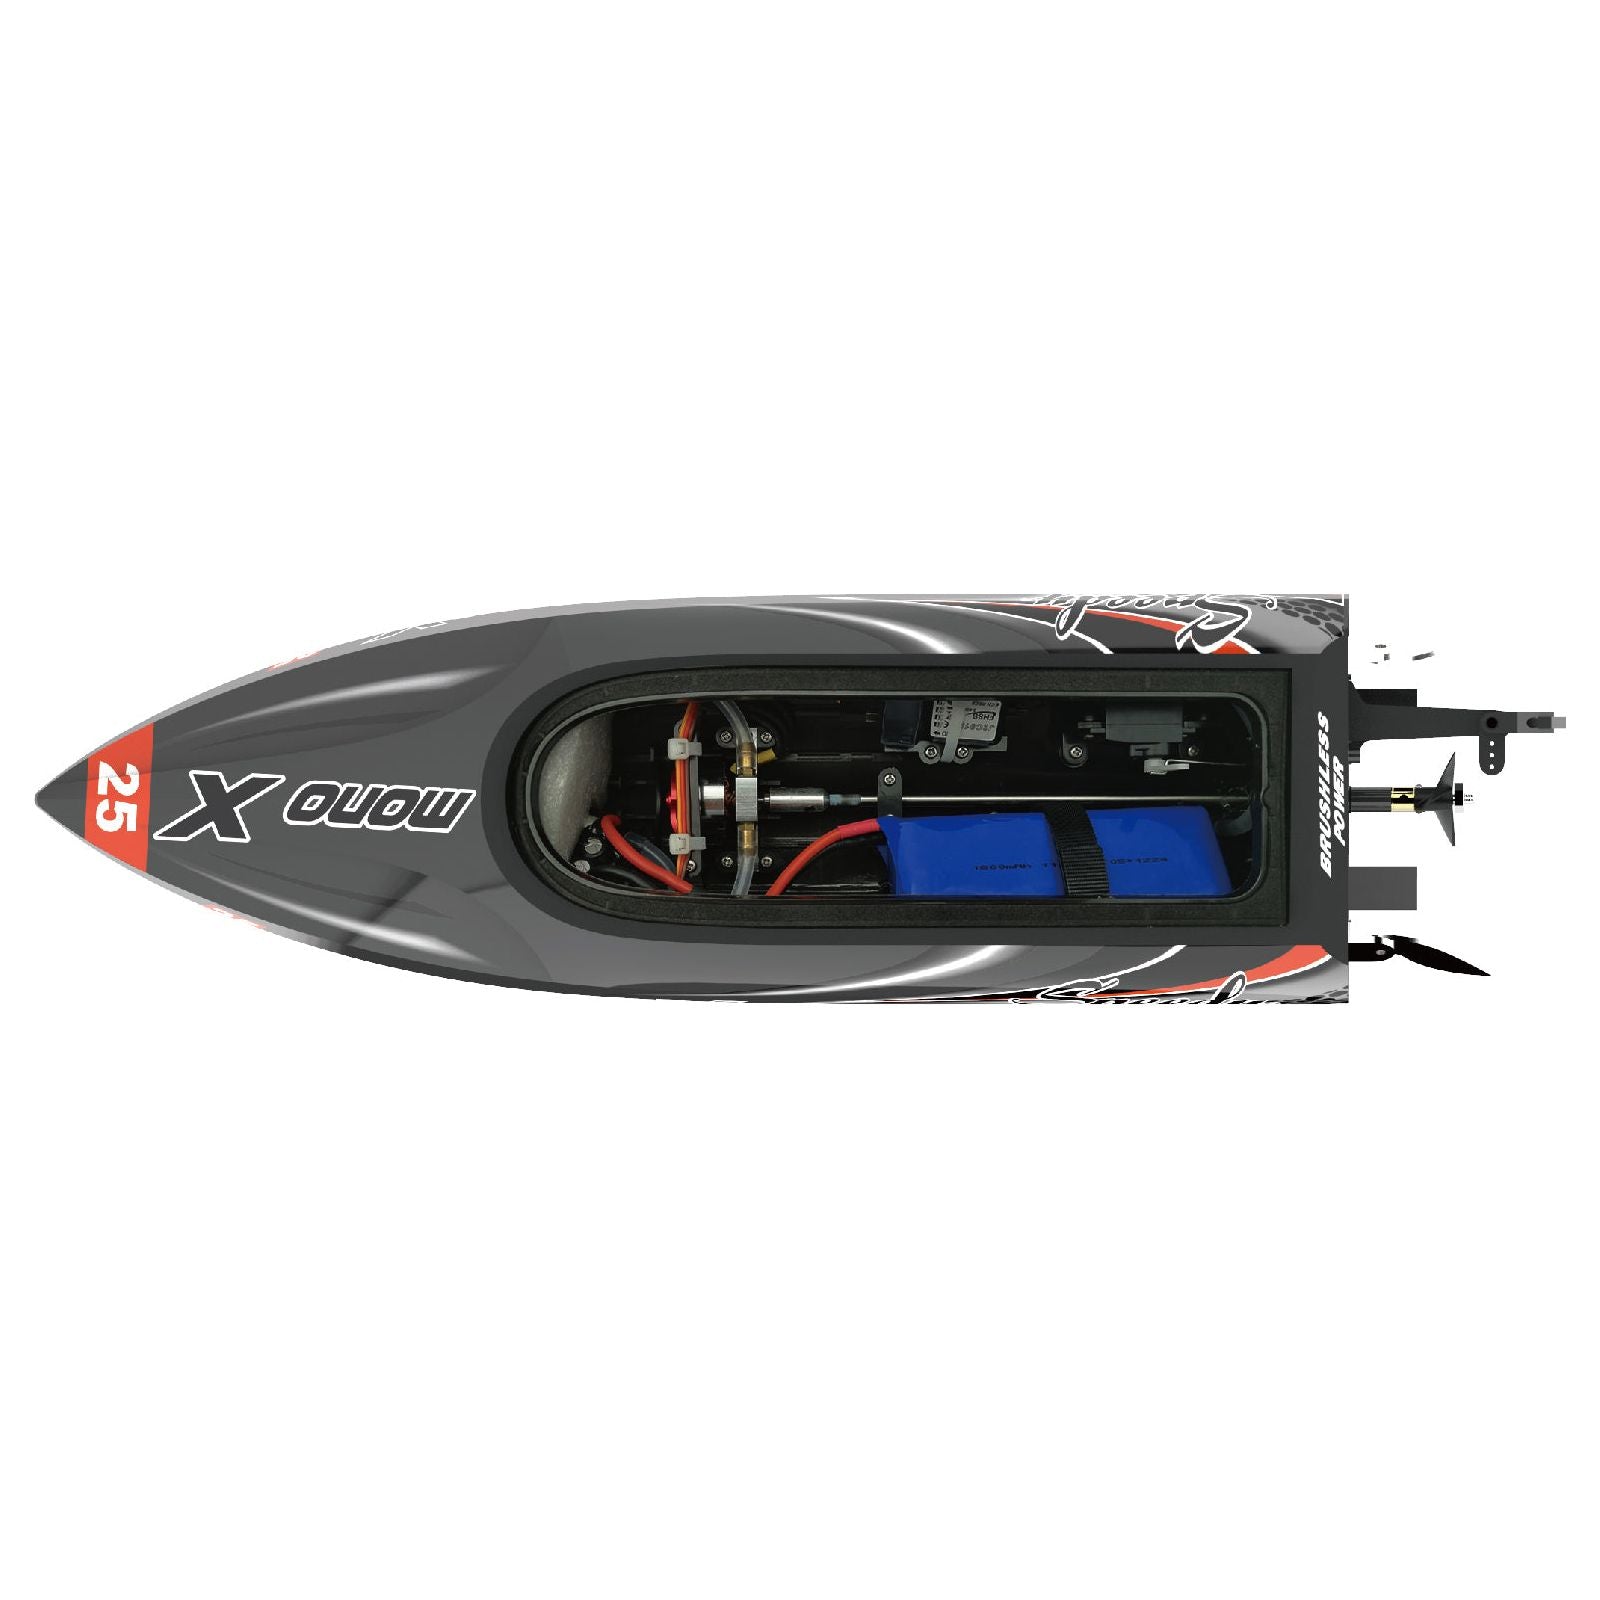 JOYSWAY Super Mono X V2 420mm ABS Hull Brushless F1 Speed Boat ARTR